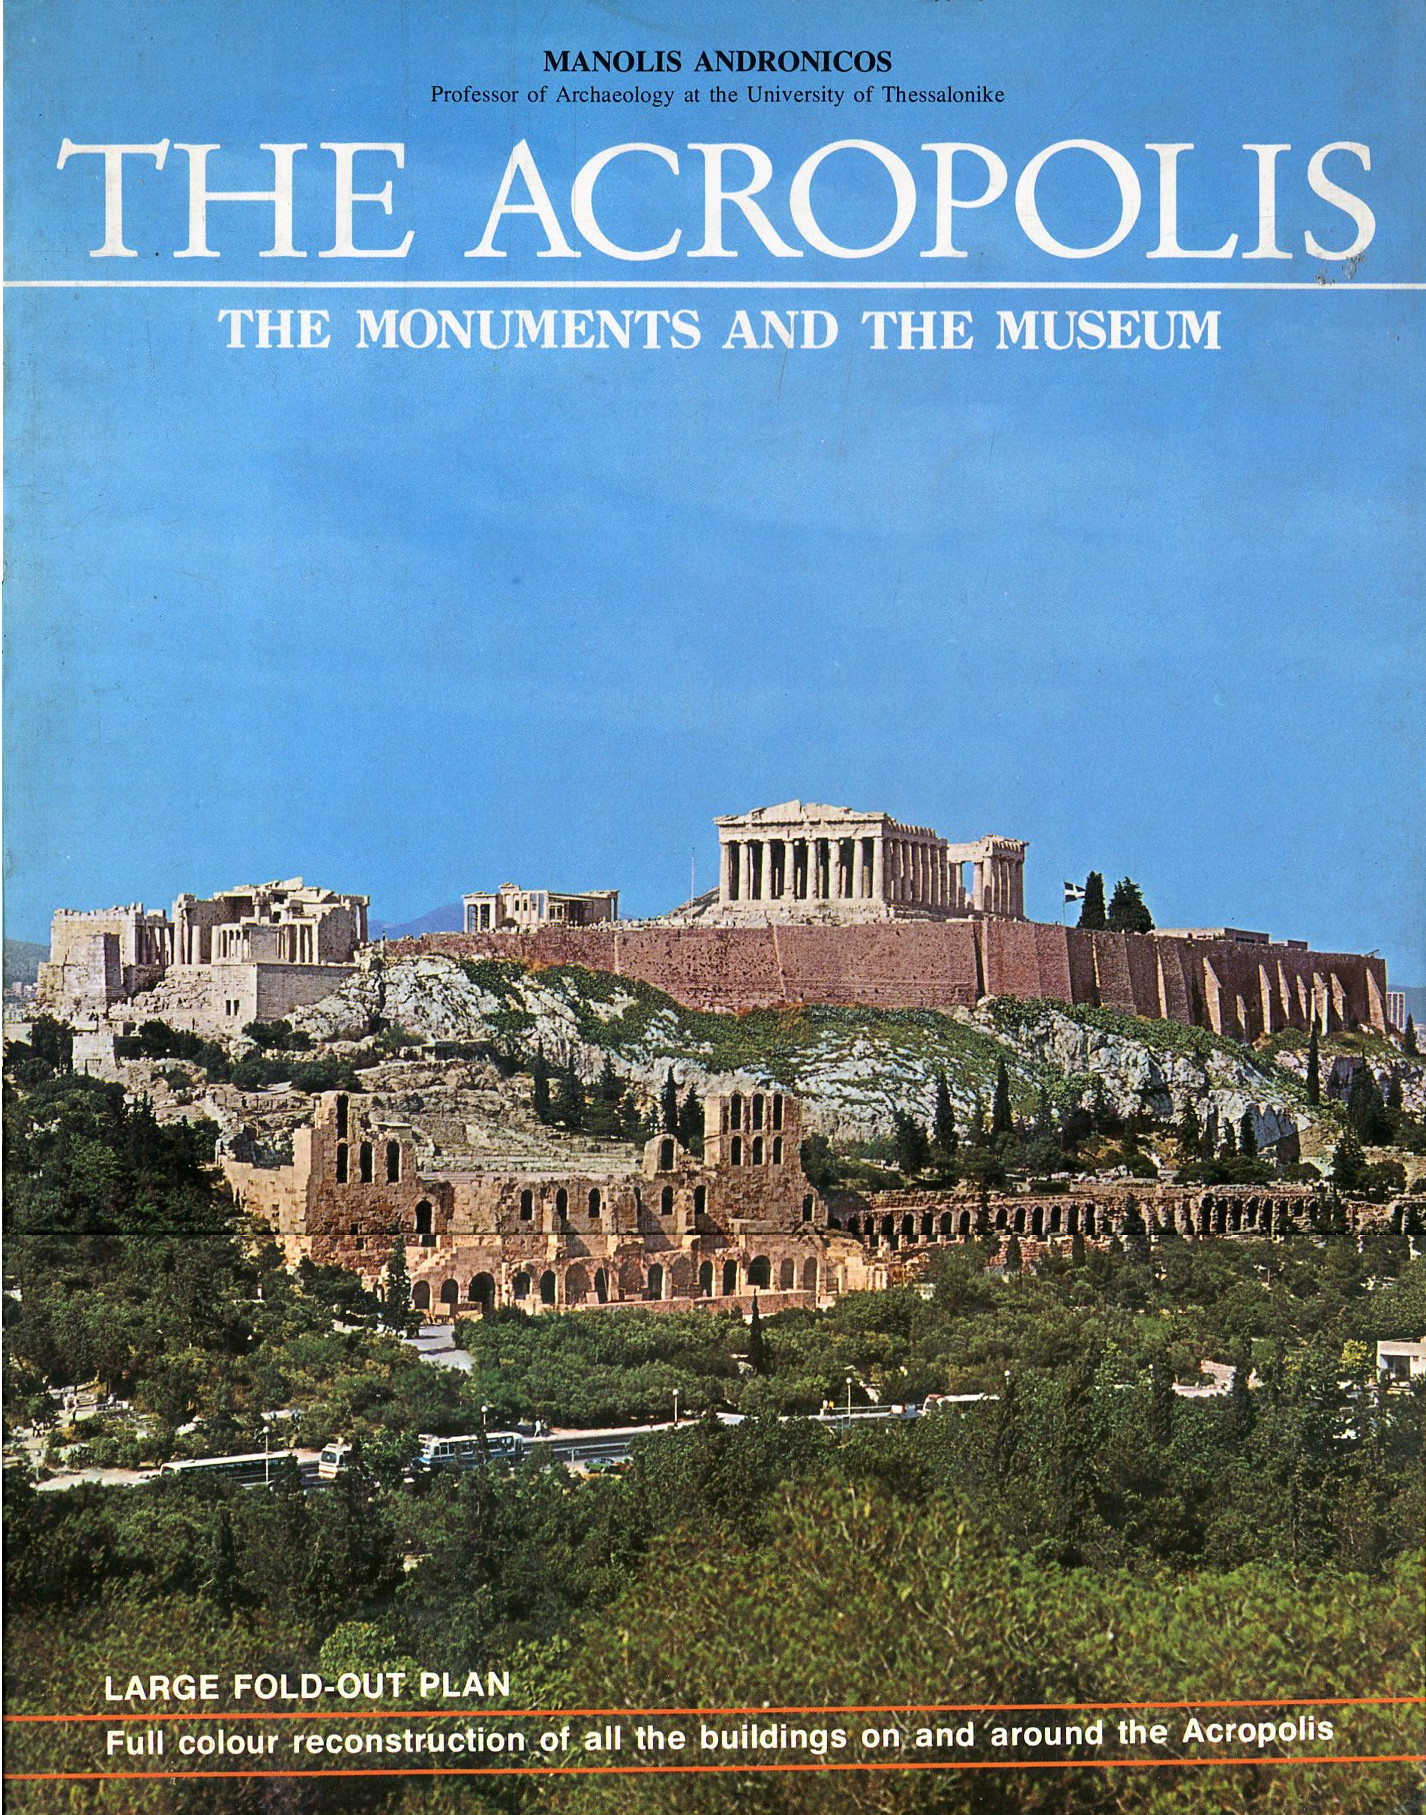 THE ACROPOLIS